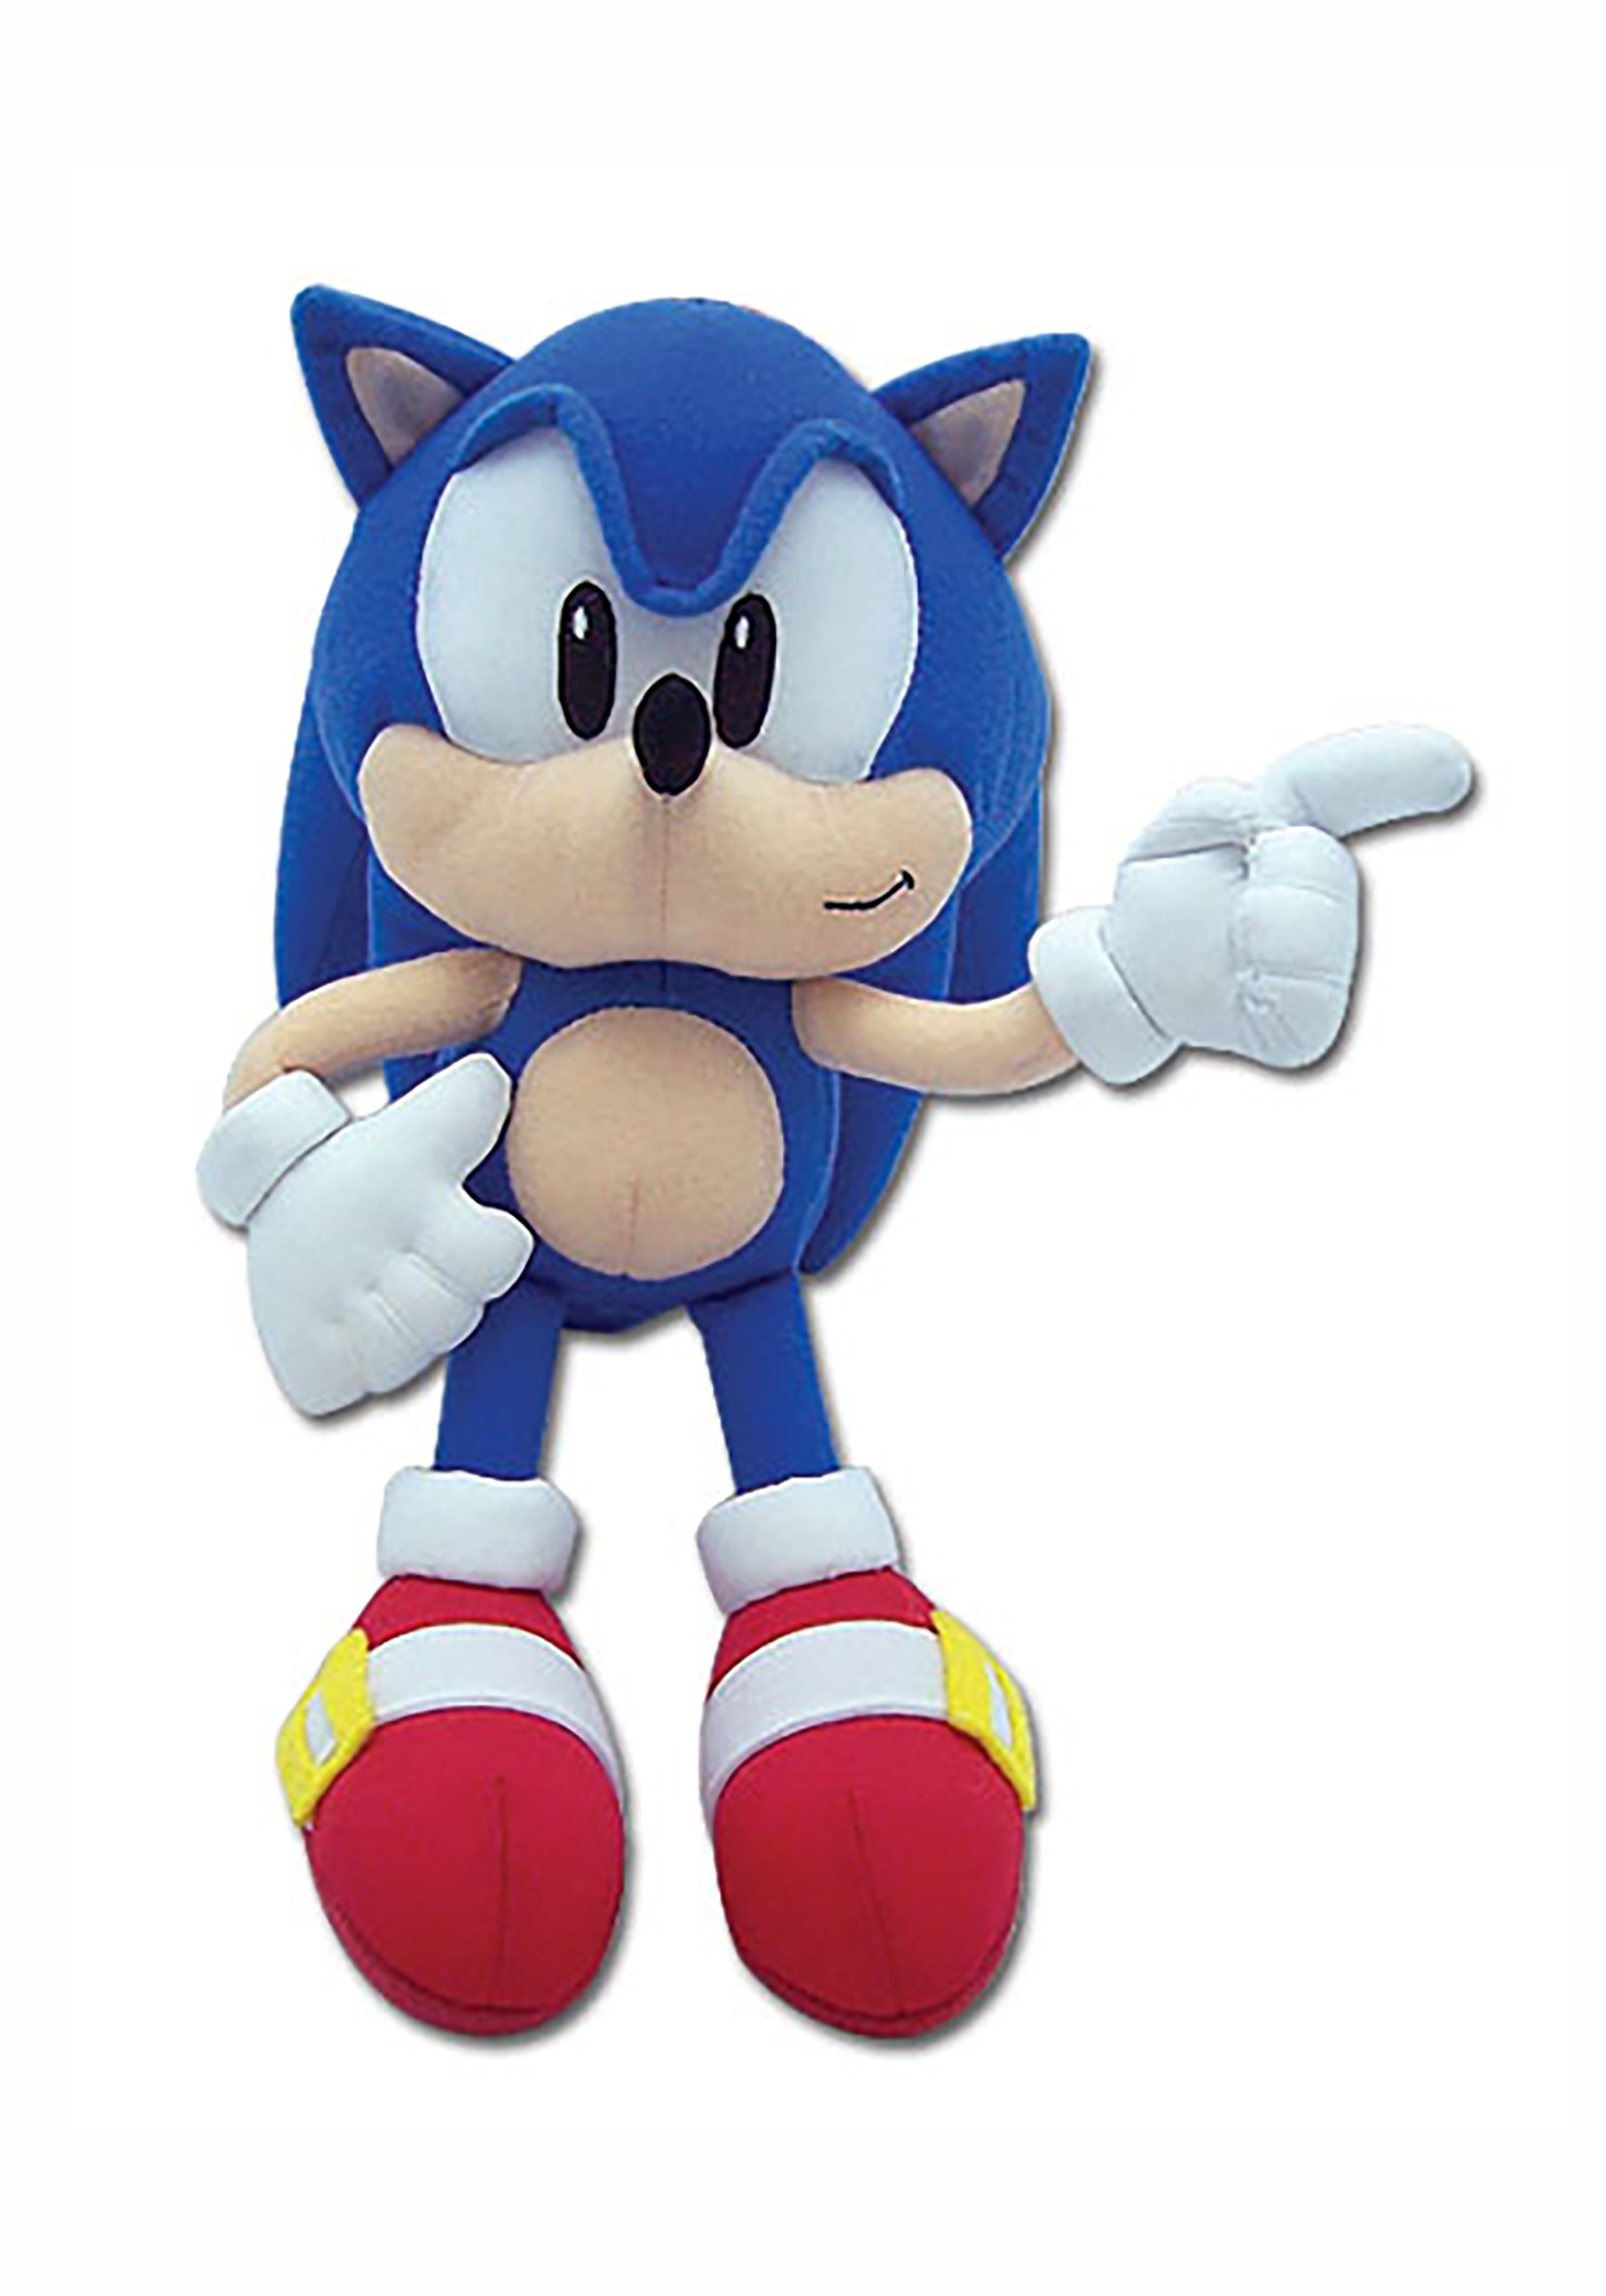 62 Sonic the heghog ideas  sonic, sonic the hedgehog, sonic plush toys